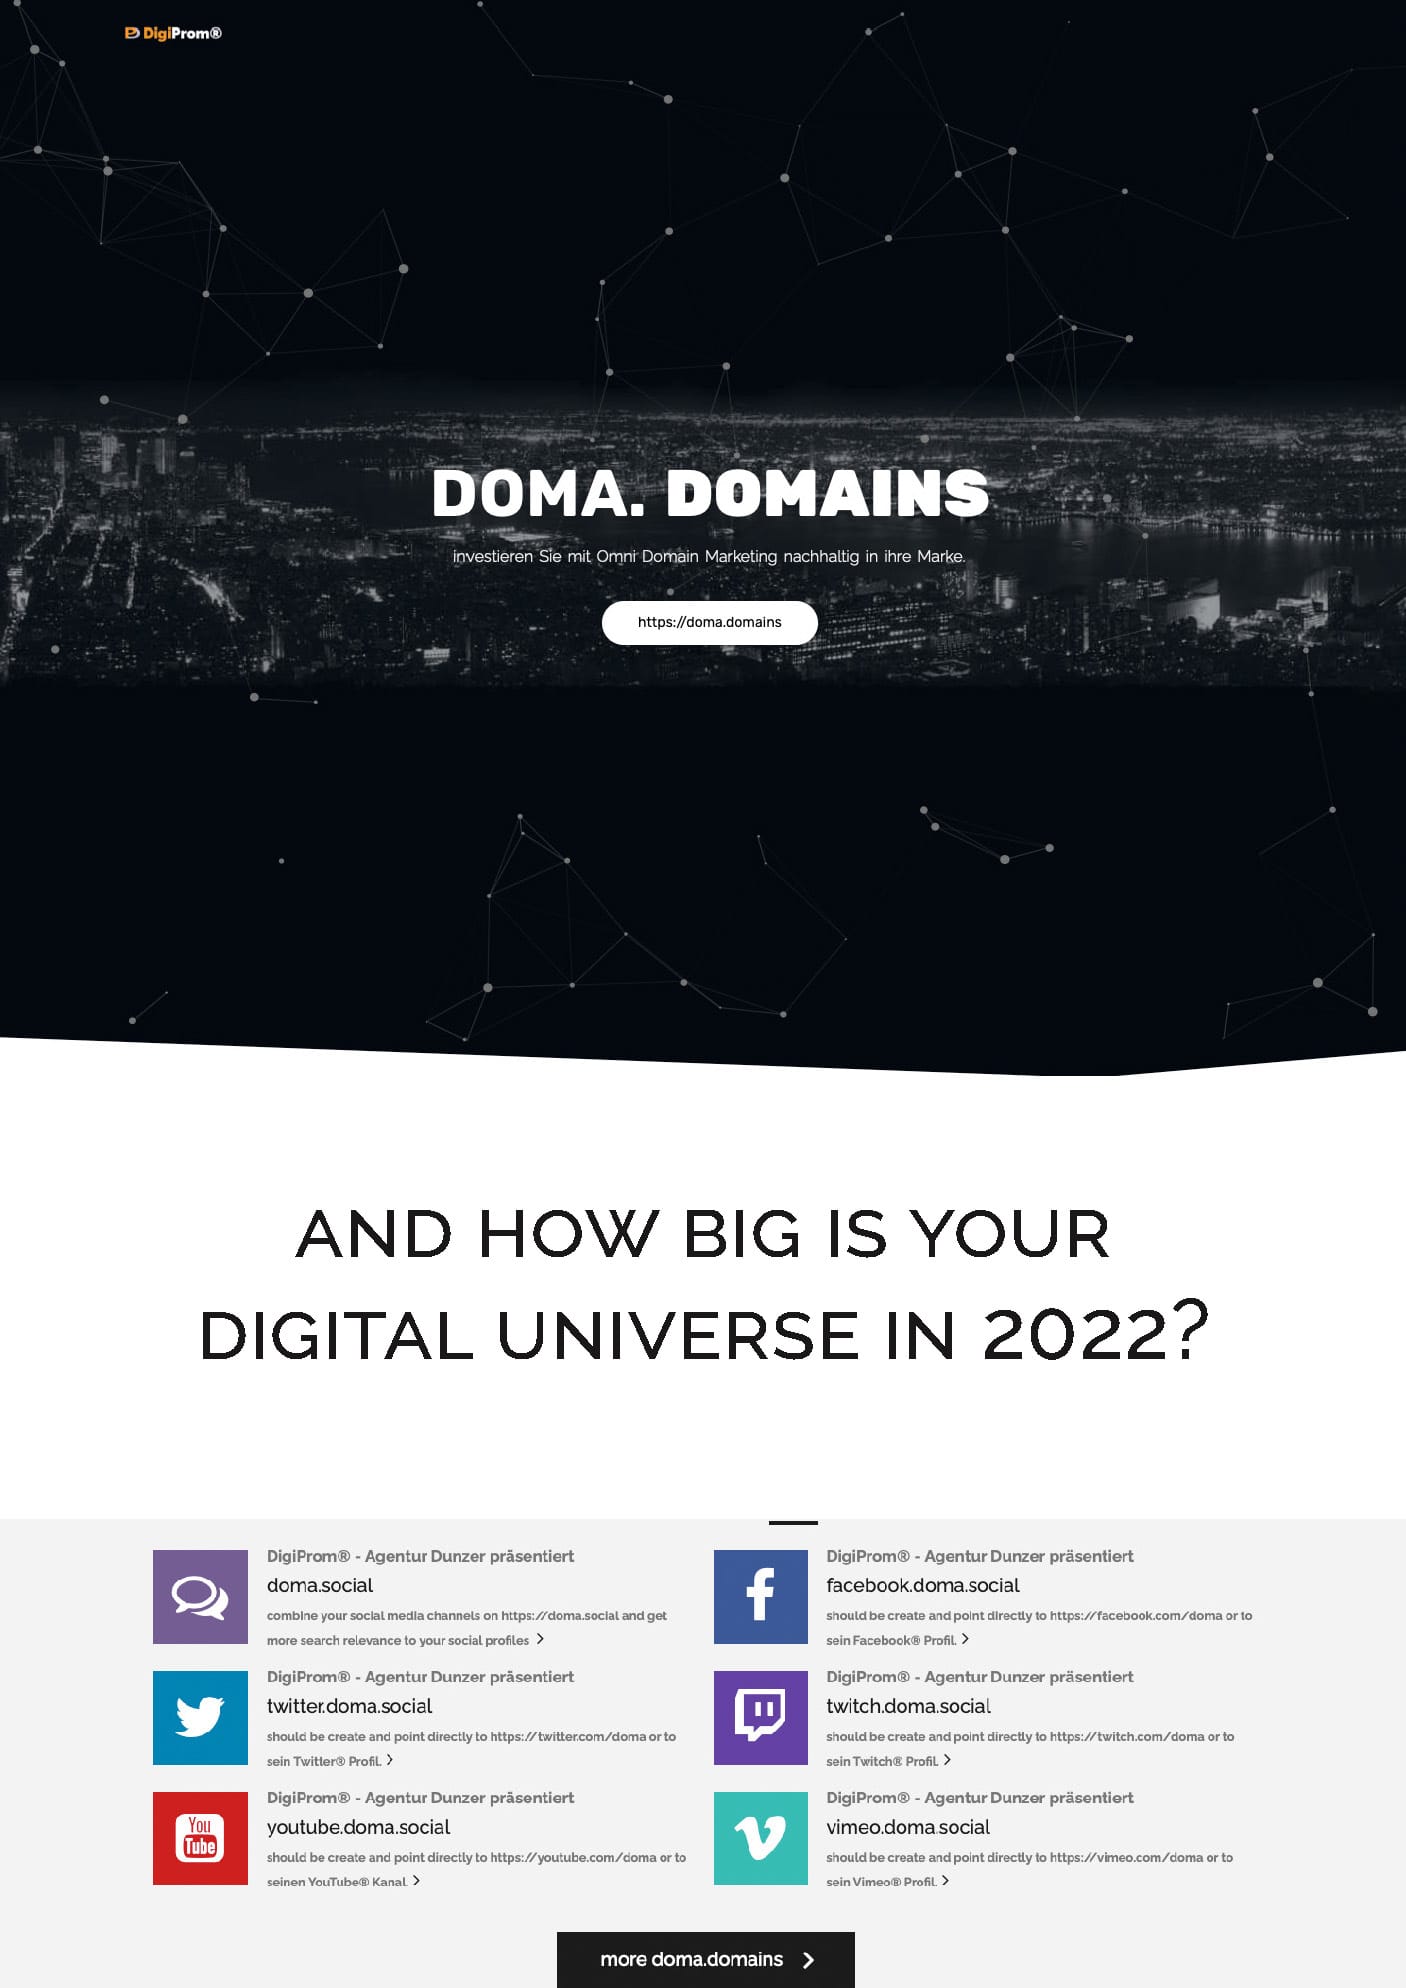 Doma.domains